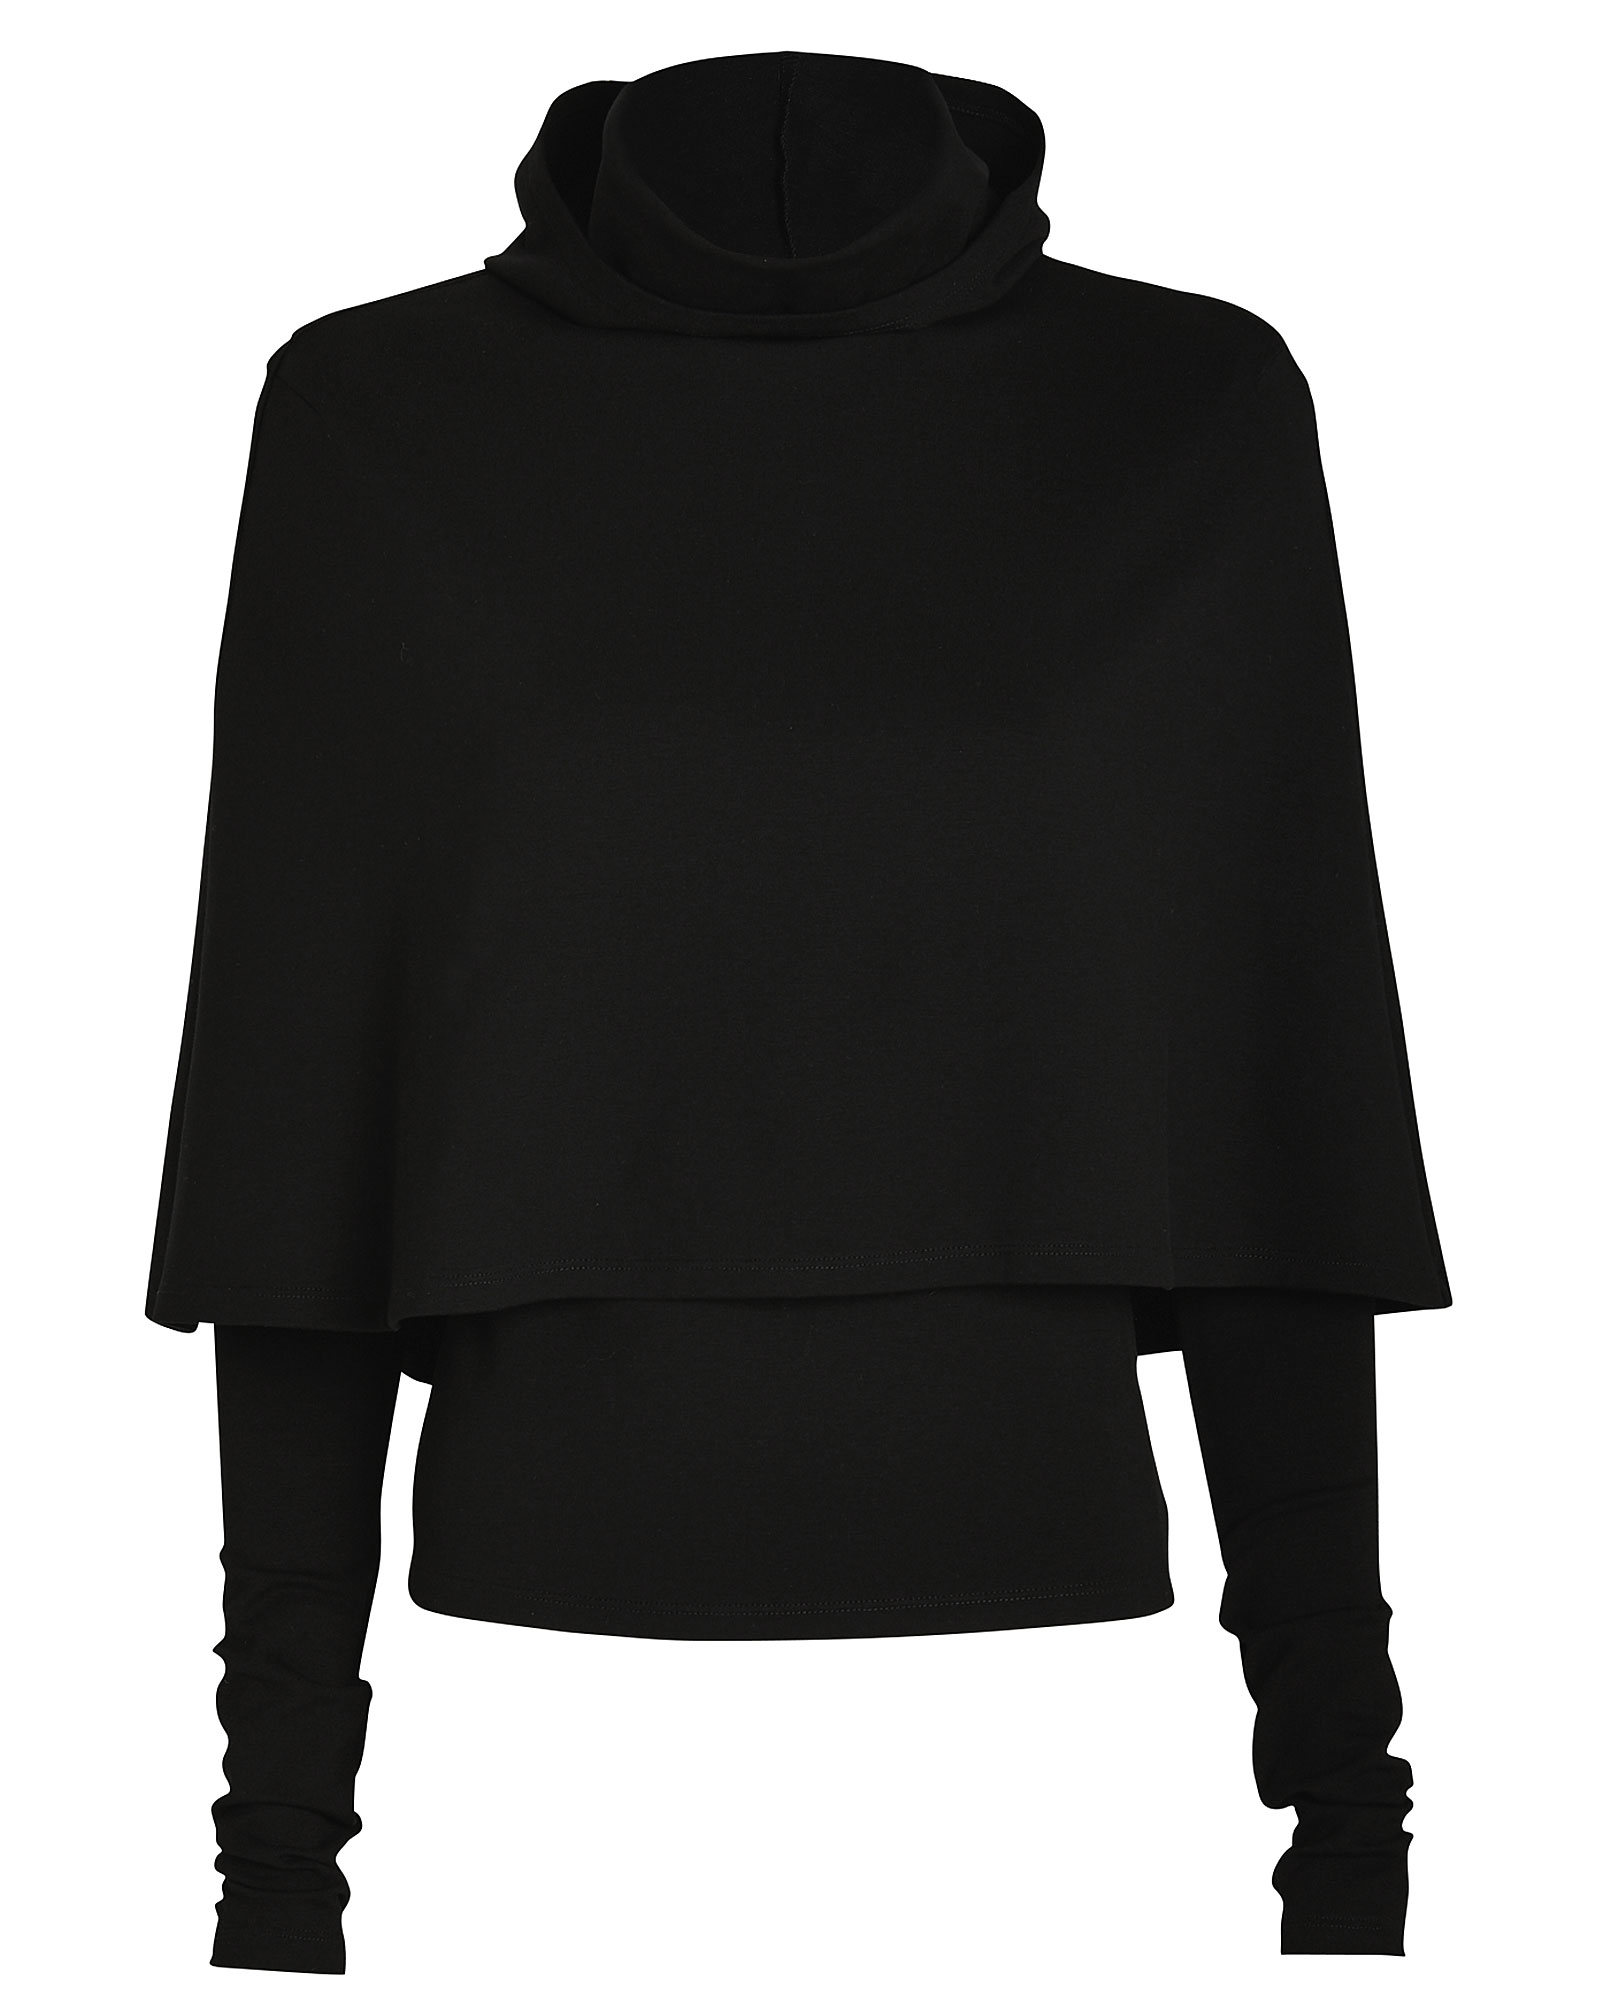 Sara Battaglia Turtleneck Hooded Cape Sweater in black | INTERMIX®